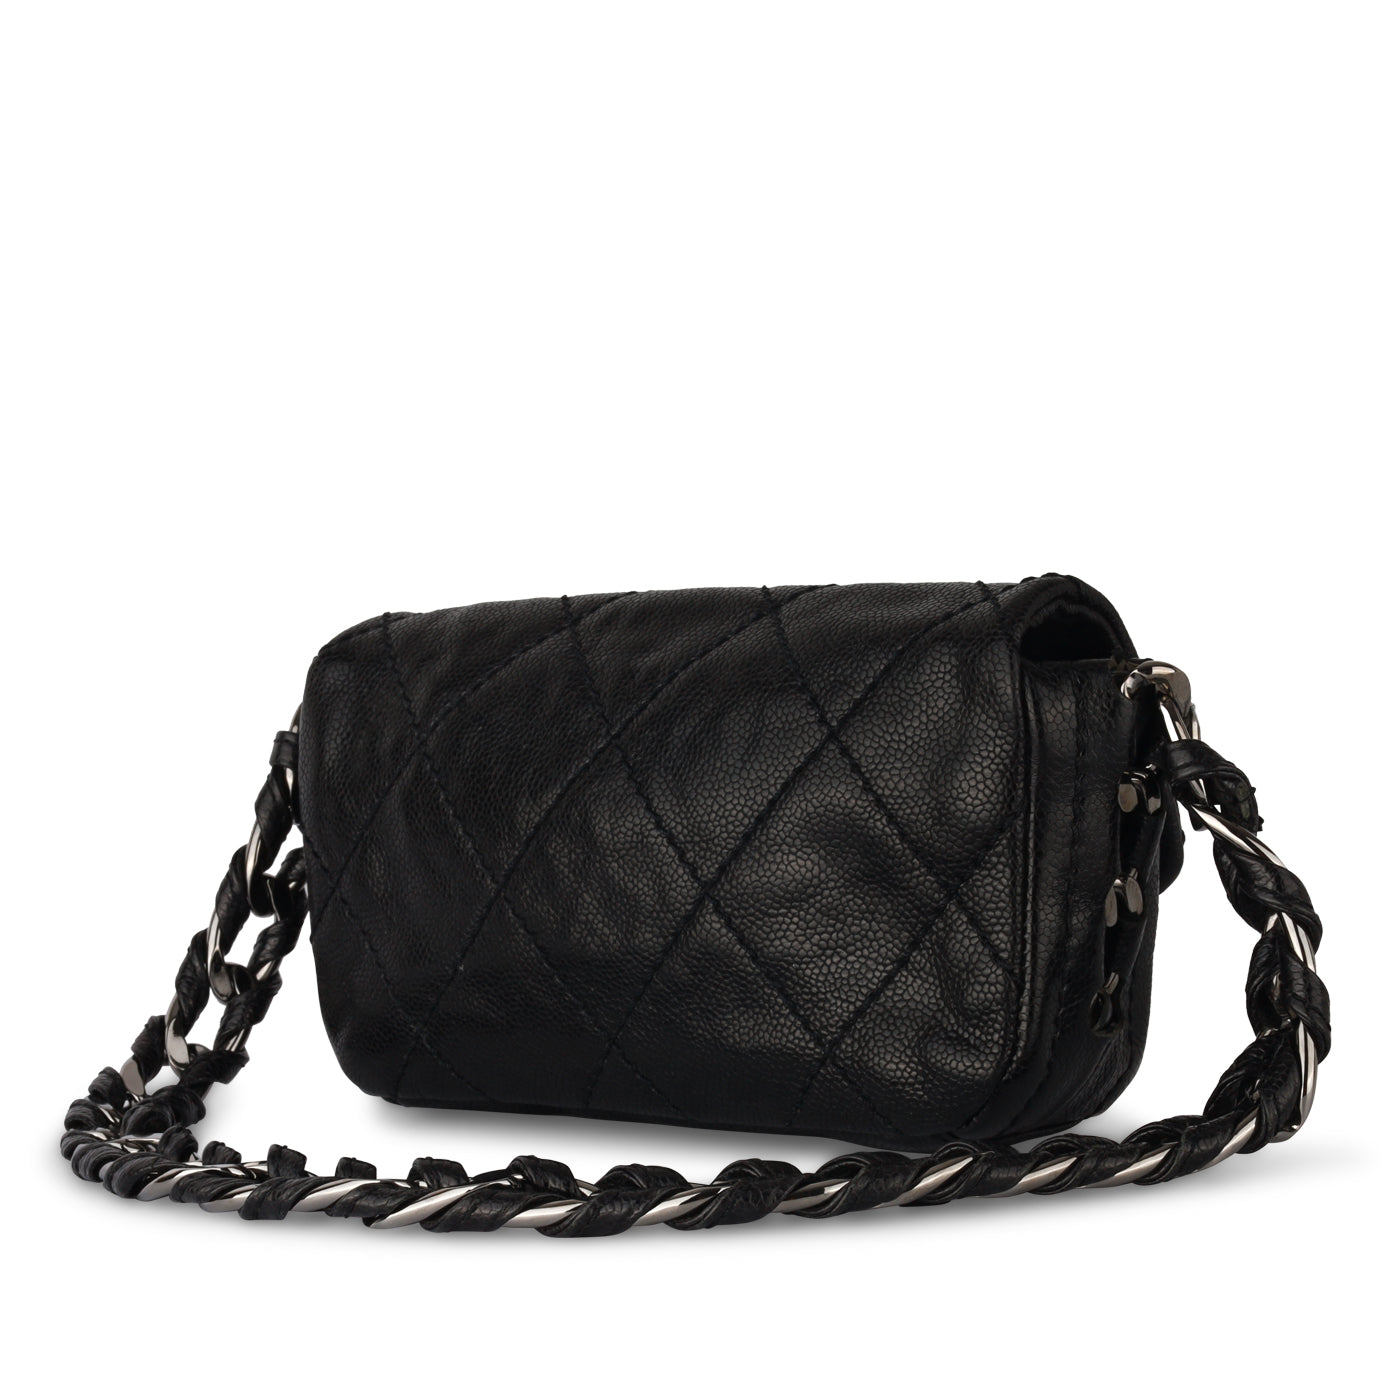 Chanel - Modern Chain Flap Bag - Black Caviar - GMHW - Pre-Loved